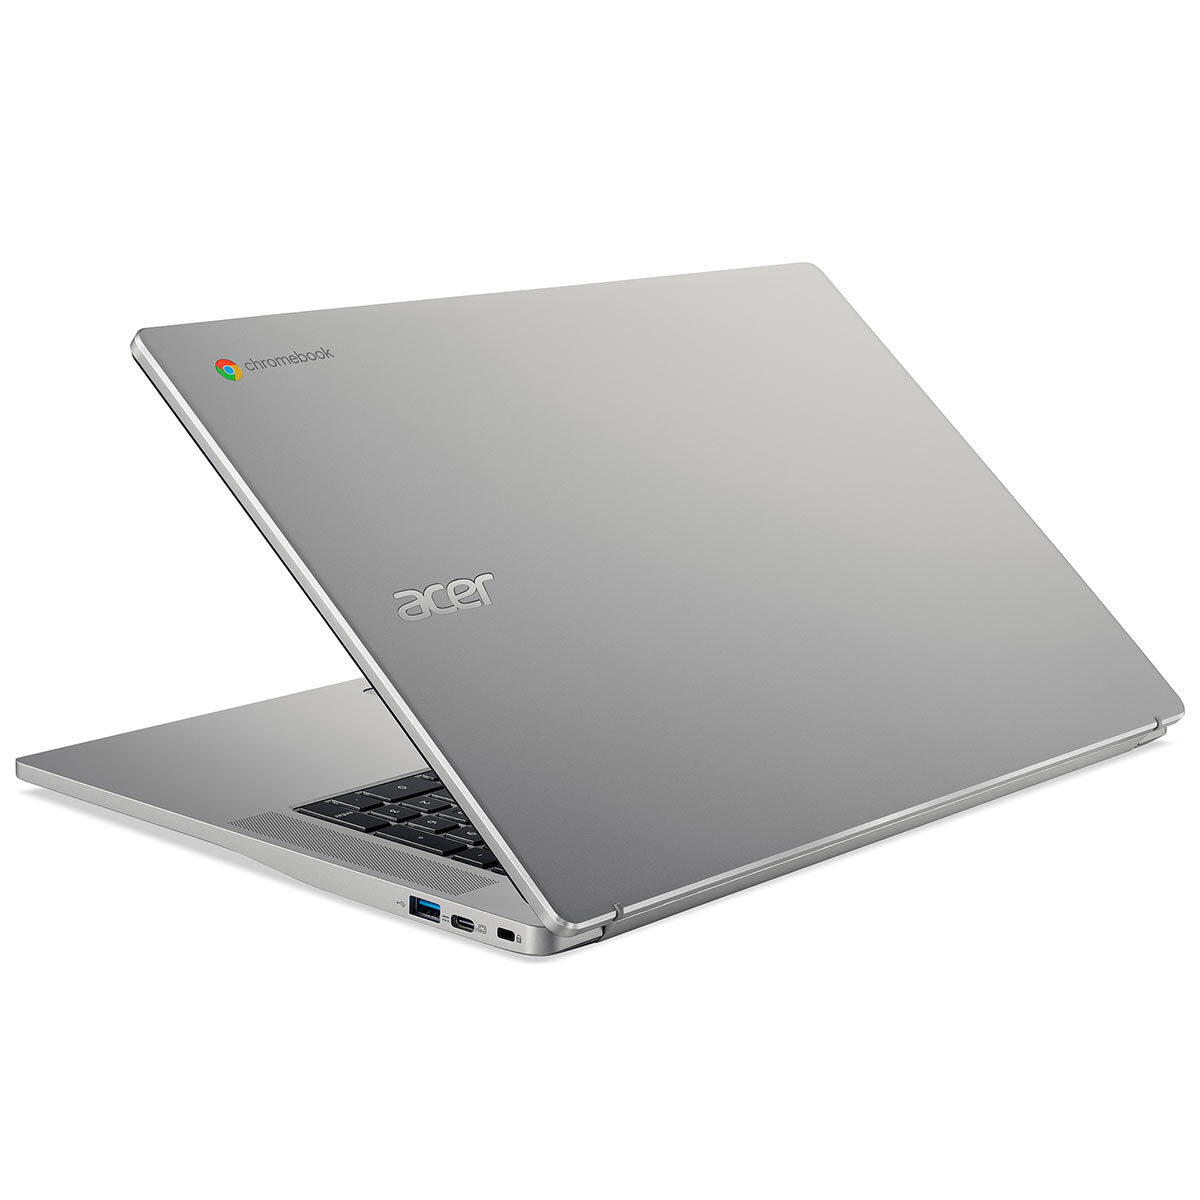 Buy Acer 317, Intel Pentium Silver, 4GB RAM, 128GB eMMC, 17.3 Inch, Chromebook, NX.AQ2EK.002 at Costco.co.uk